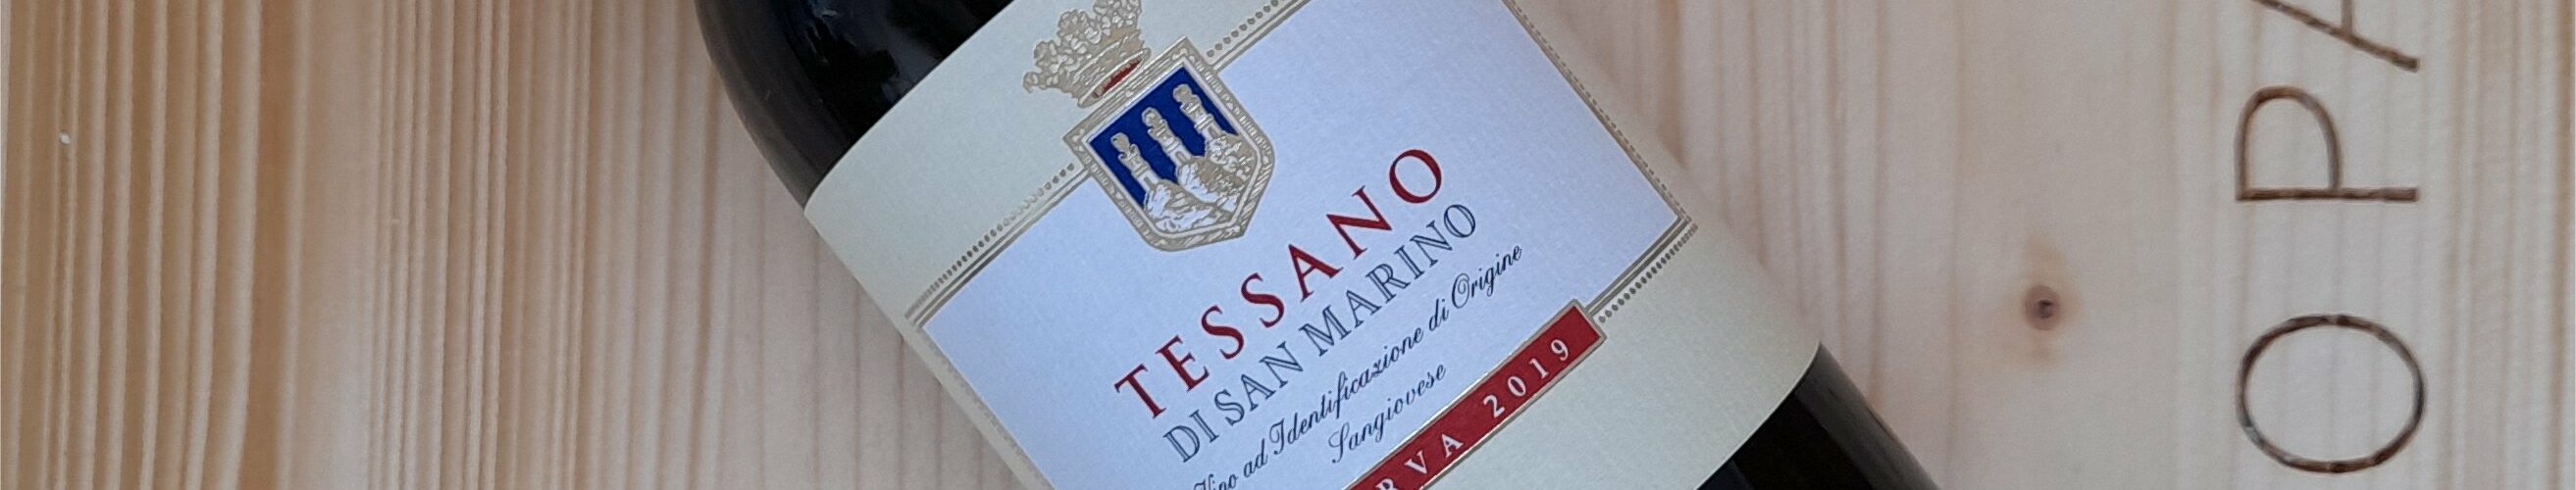 Tessano di San Marino Riserva 2019 - Cantina San Marino